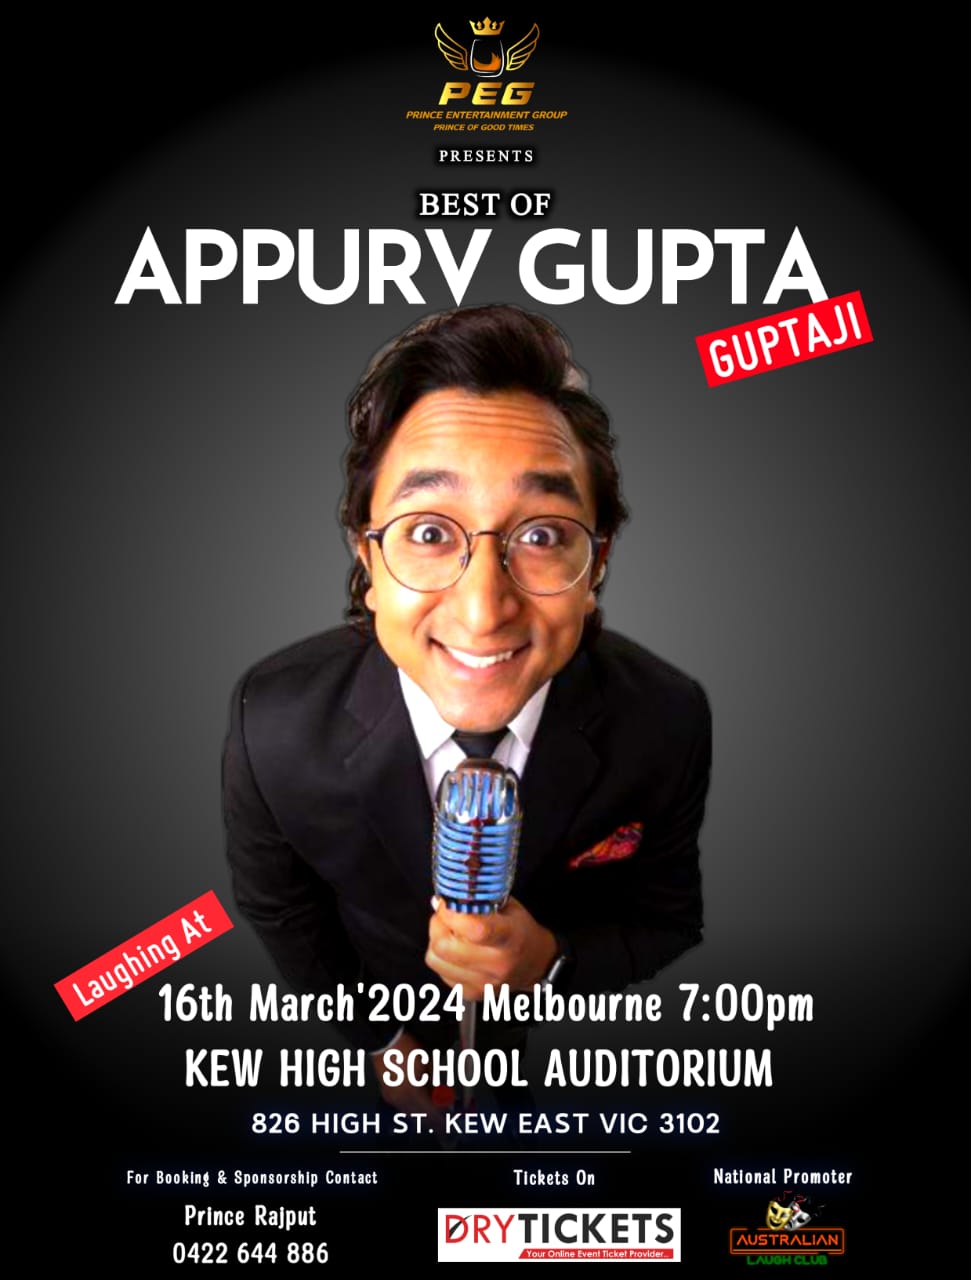 Best of Gupta Ji by Appurv Gupta In Melbourne 2024